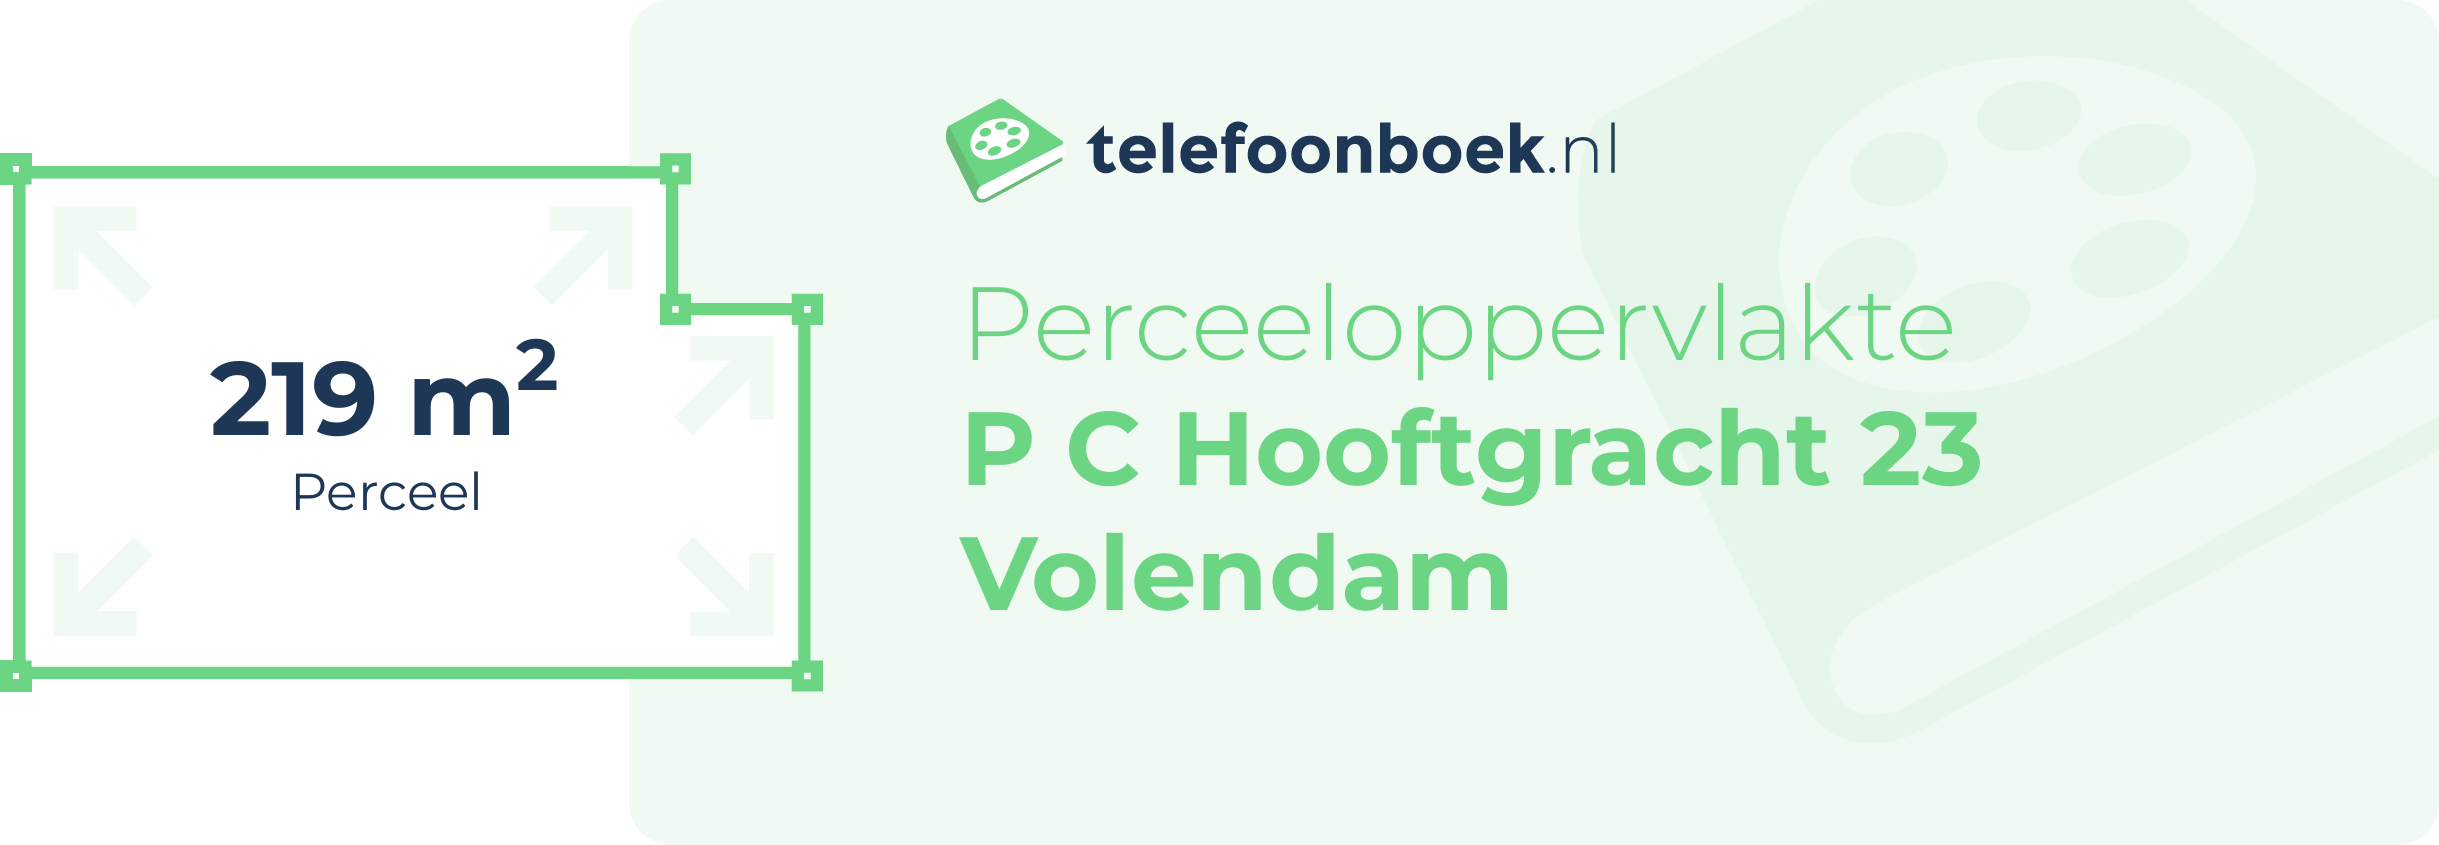 Perceeloppervlakte P C Hooftgracht 23 Volendam